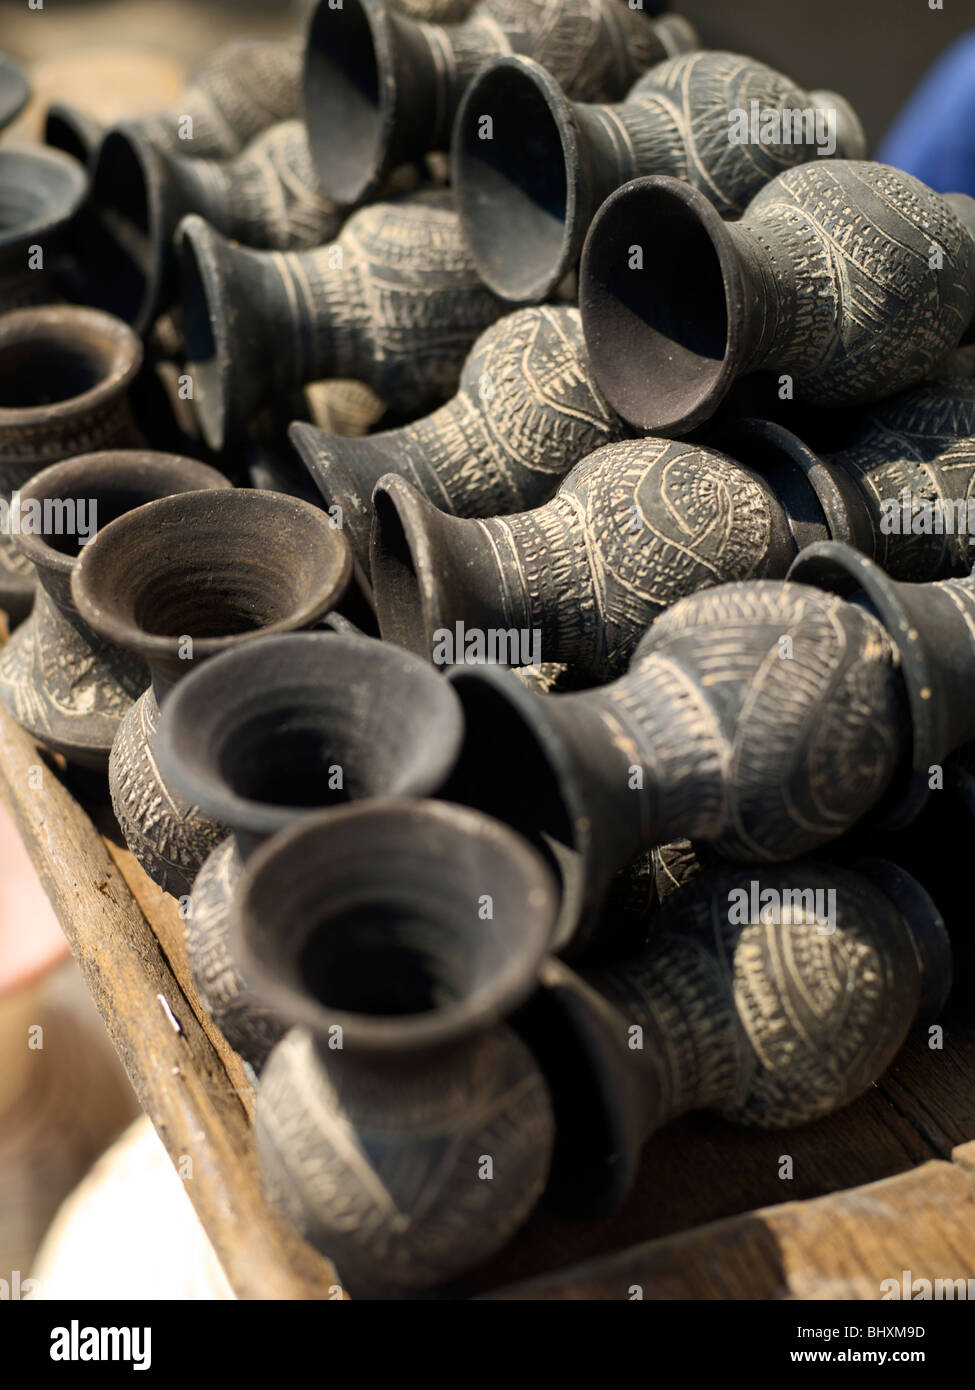 Black ban chiang jugs Stock Photo